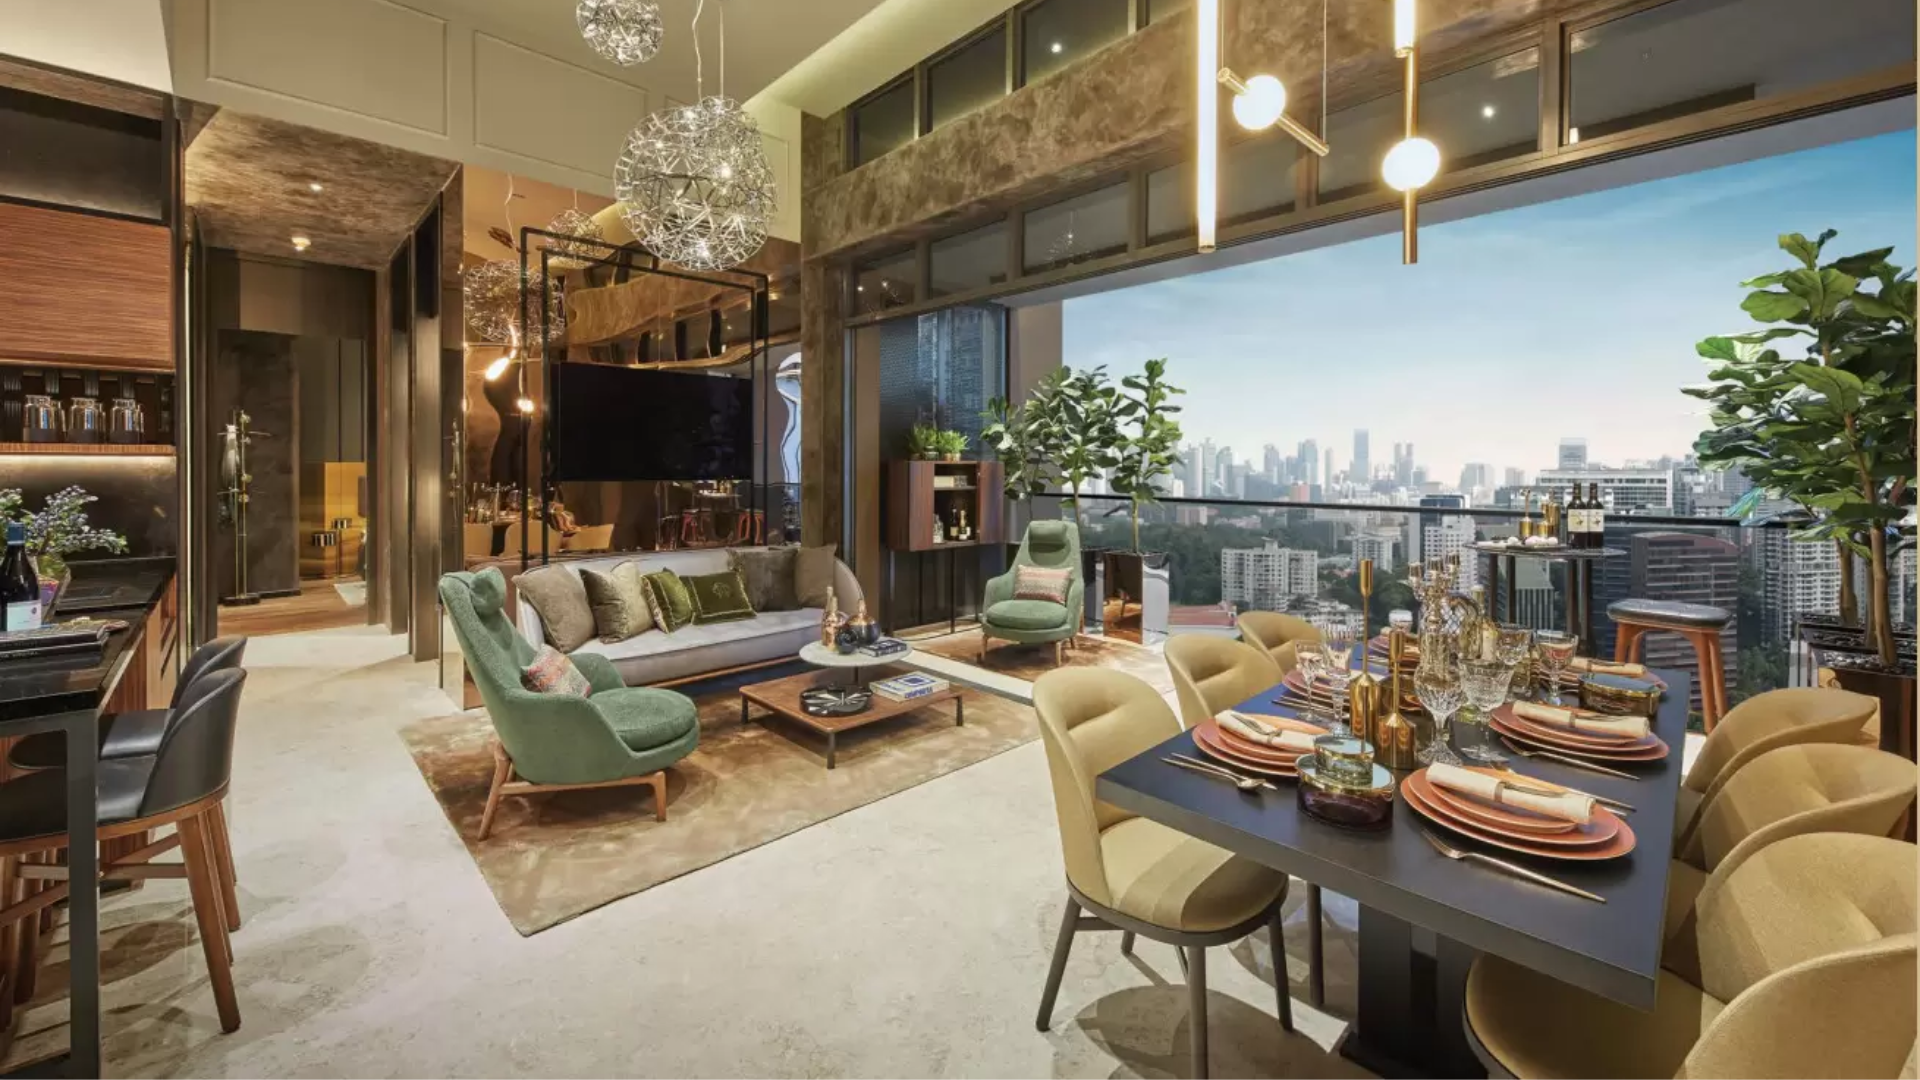 Pullman Residences Singapore luxury apartments living room